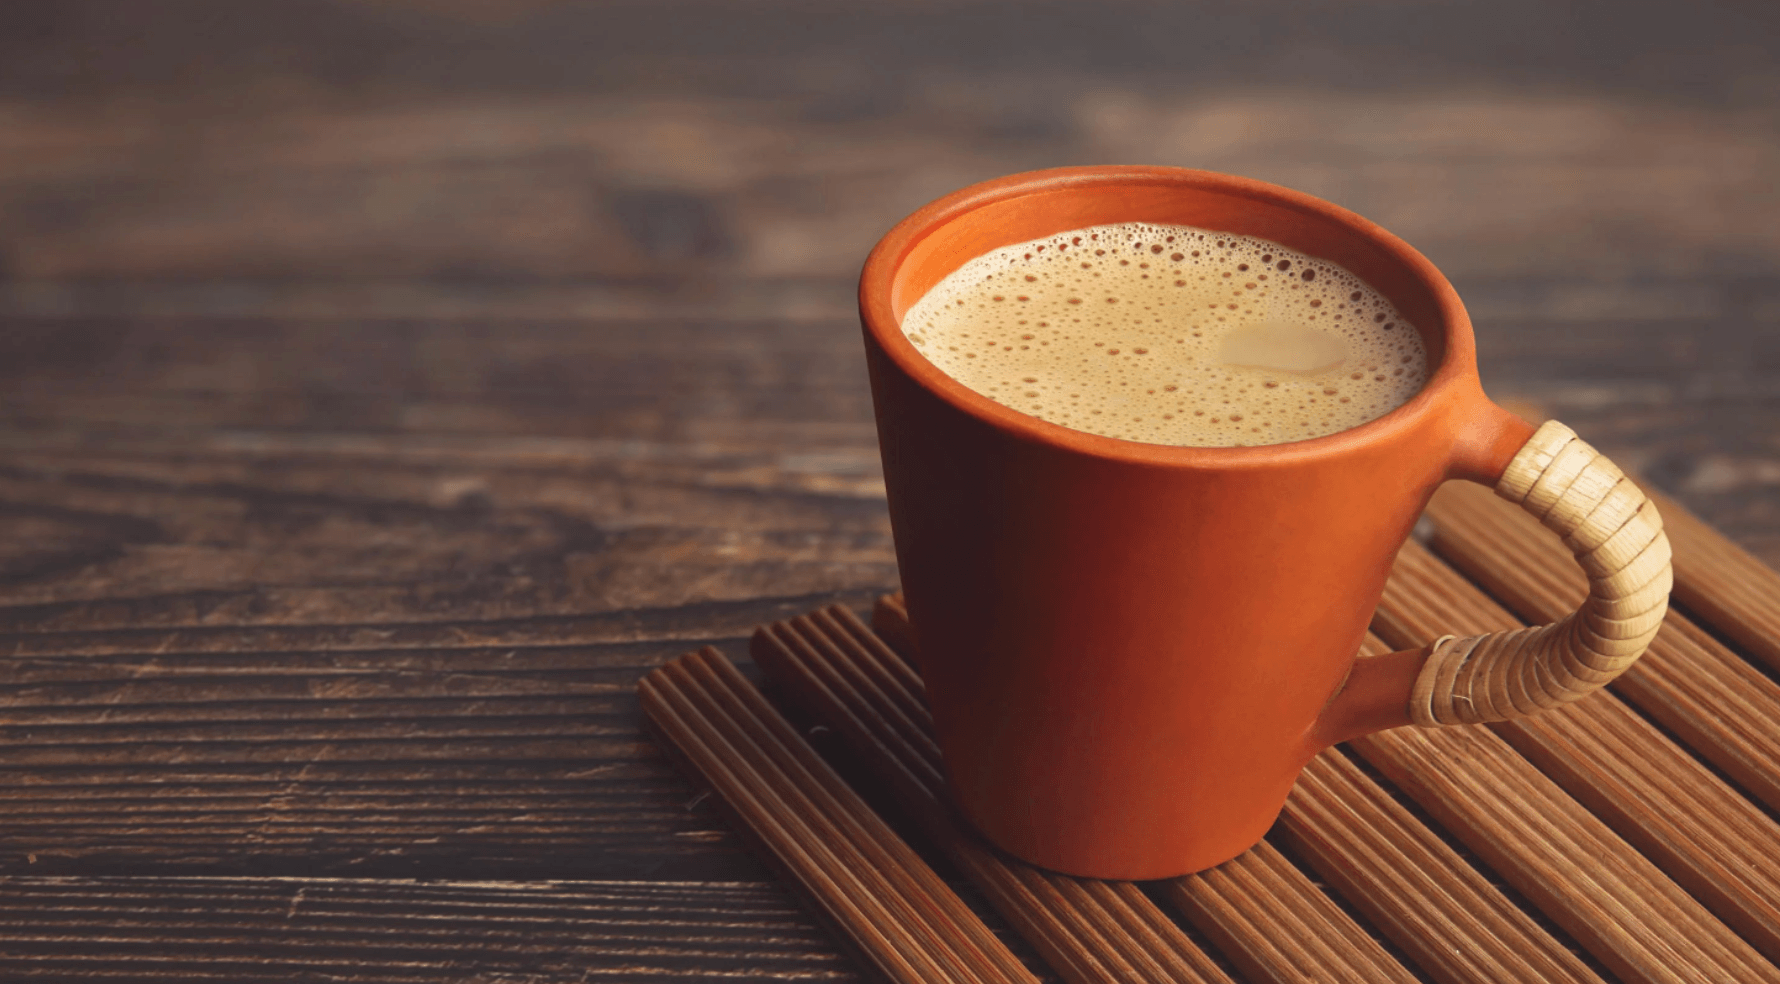 moksha caffeine free mushroom coffee in a red mug